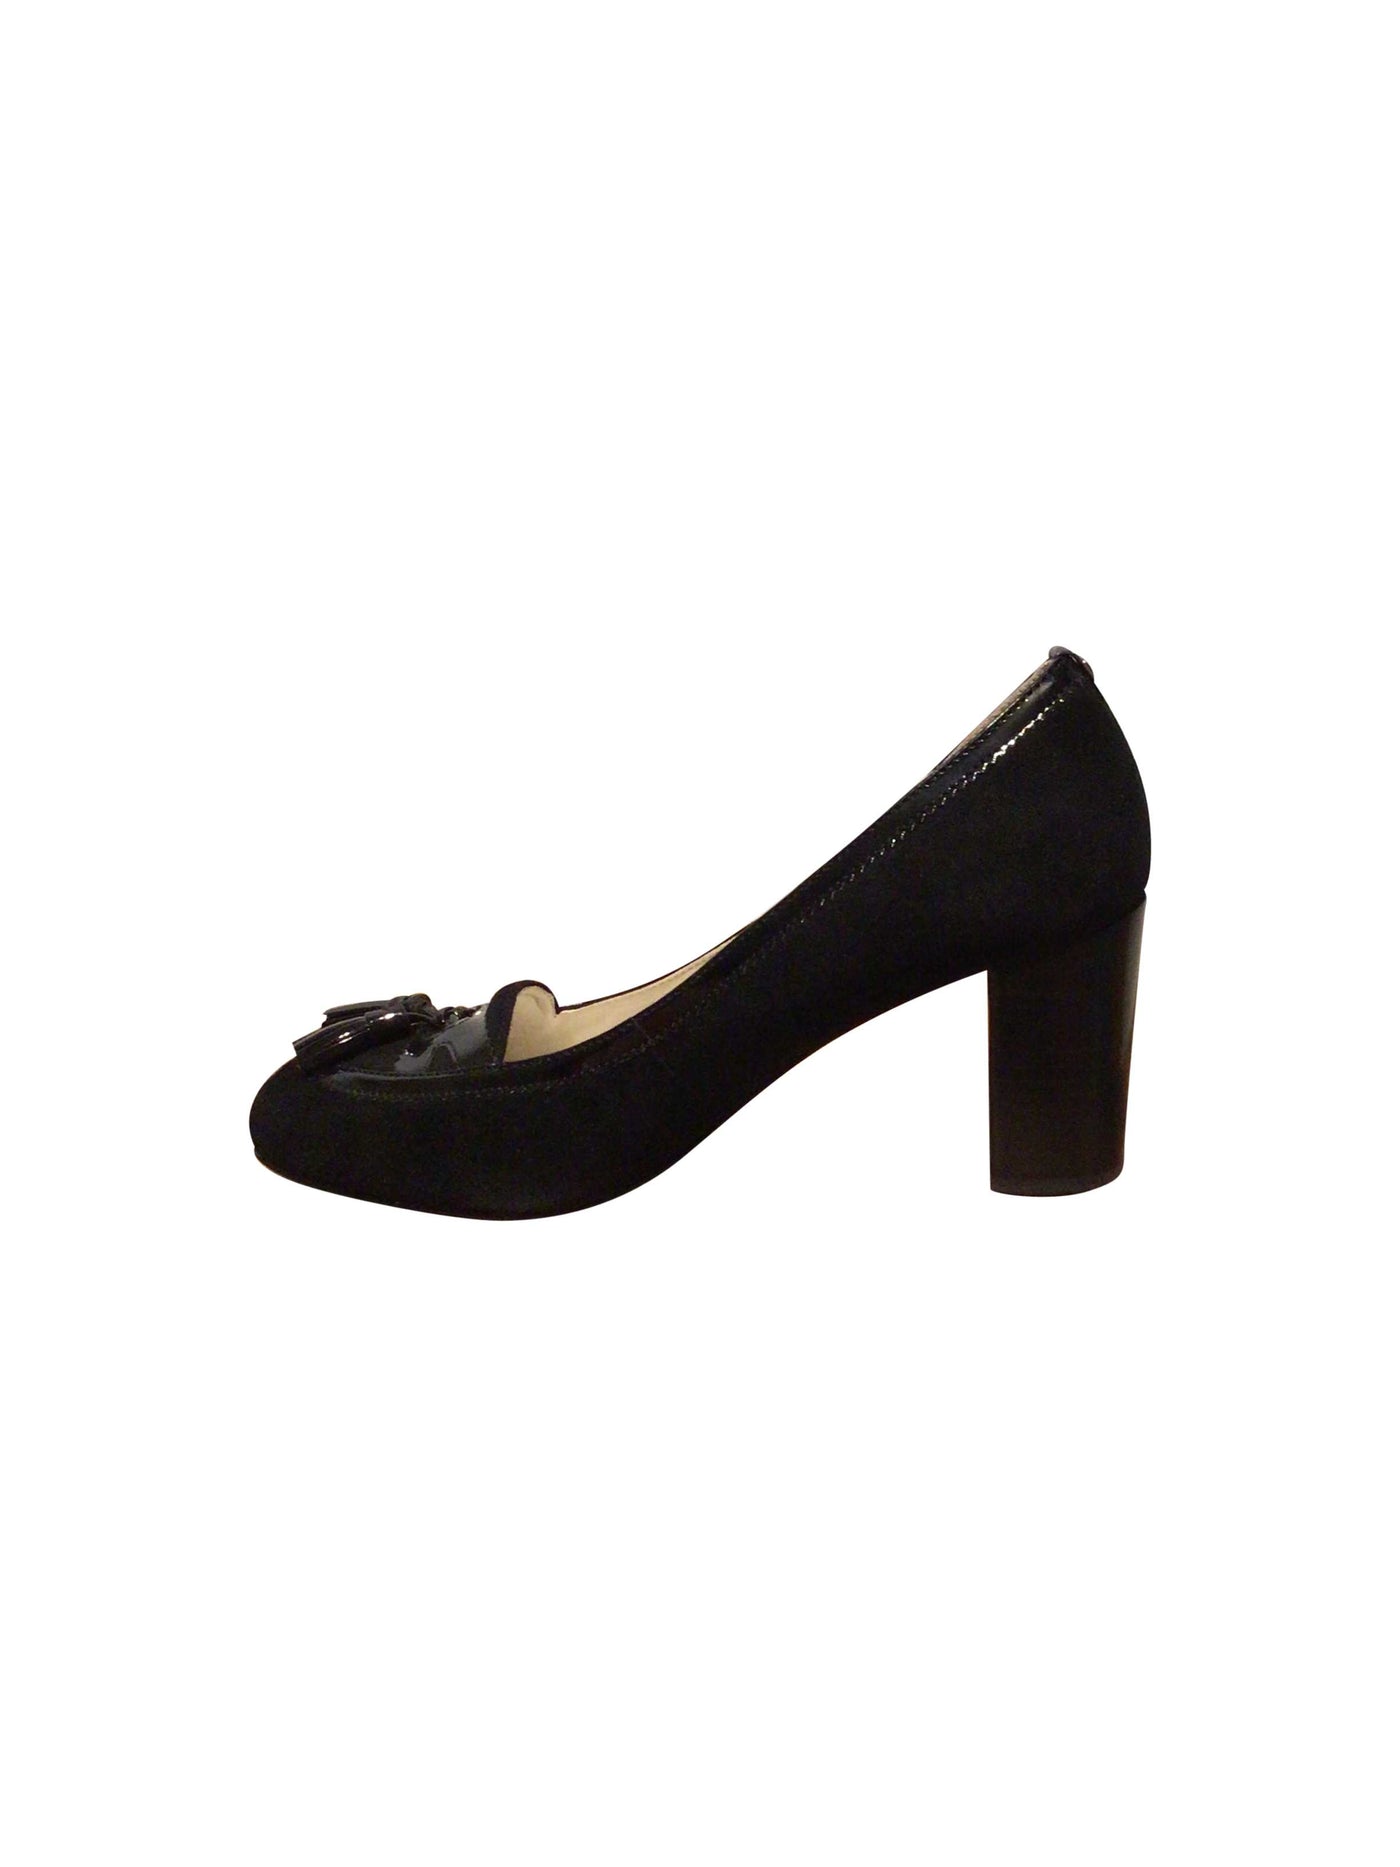 NATURALIZER High Heels in Black  -  6.5  44.99 Koop